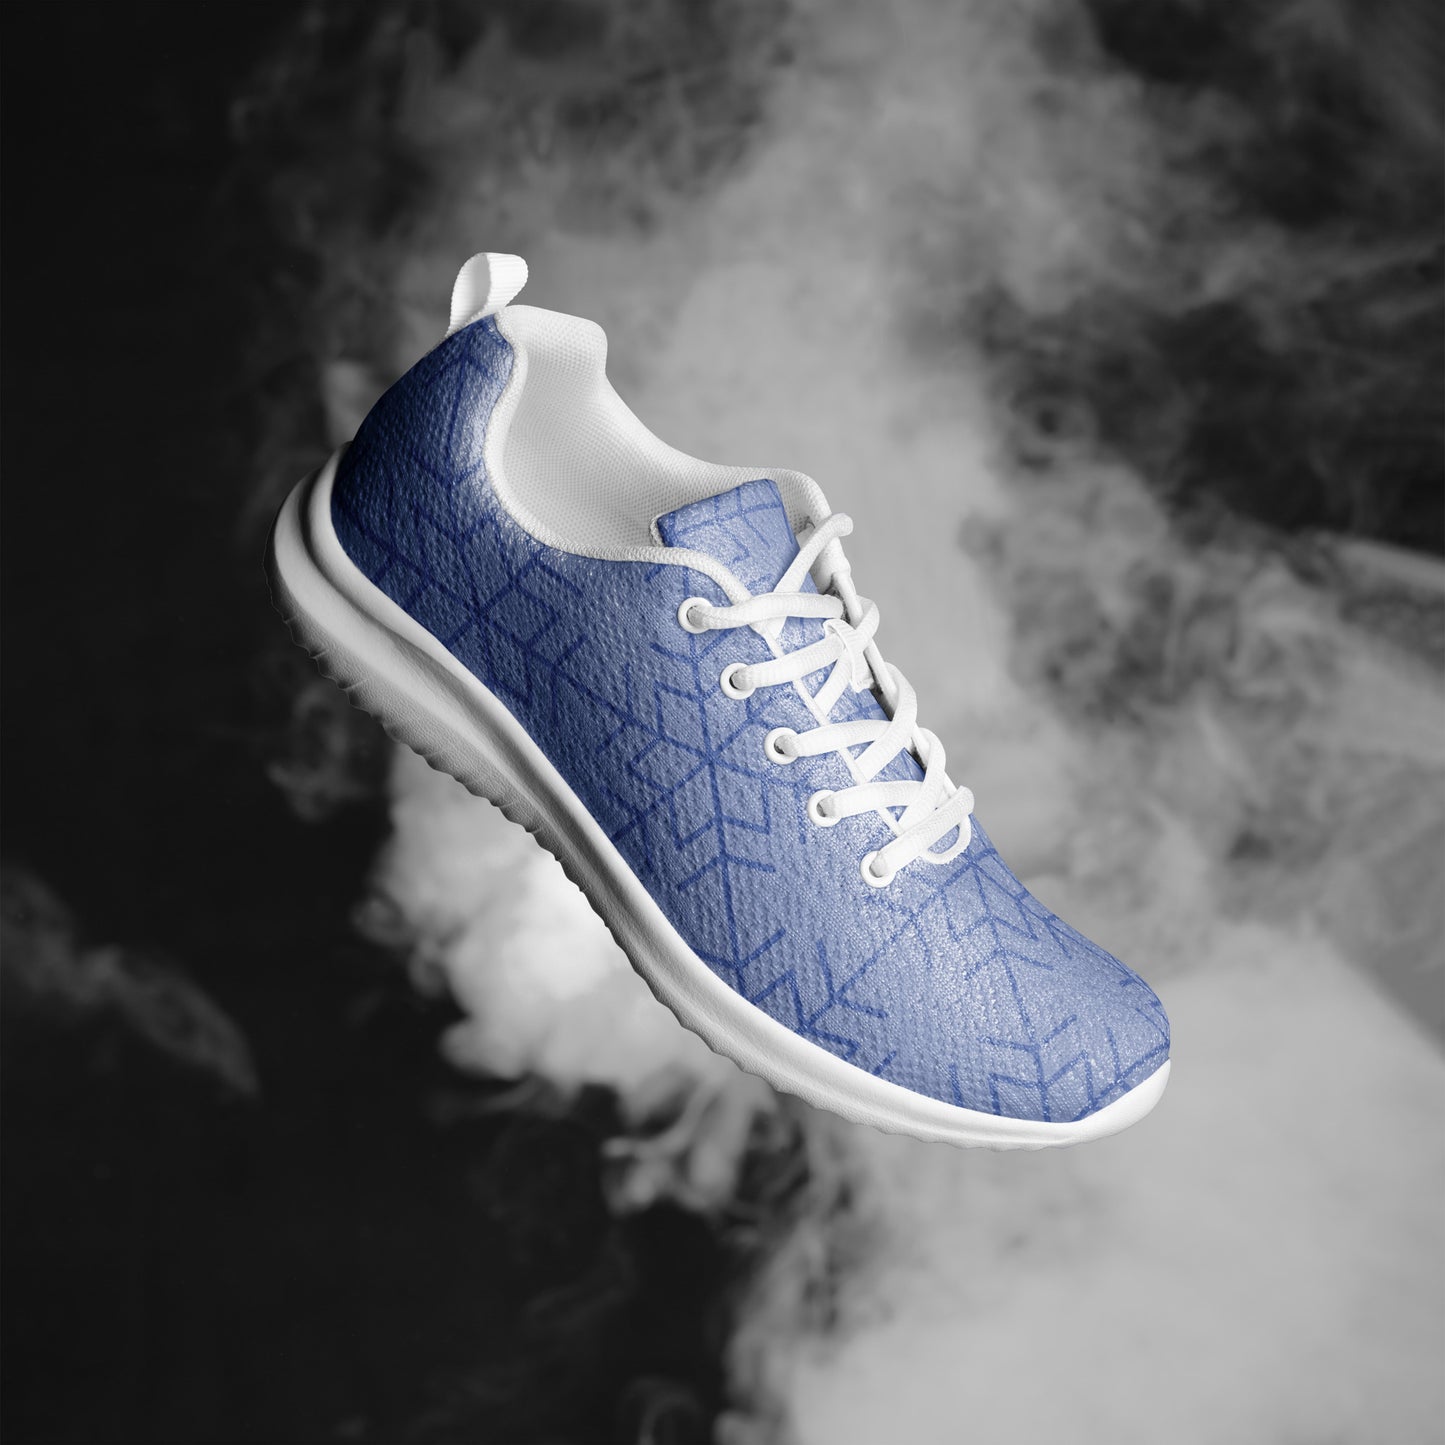 DASH Silver Blue Snow Flake Men’s Athletic Shoes Lightweight Breathable Design by IOBI Original Apparel